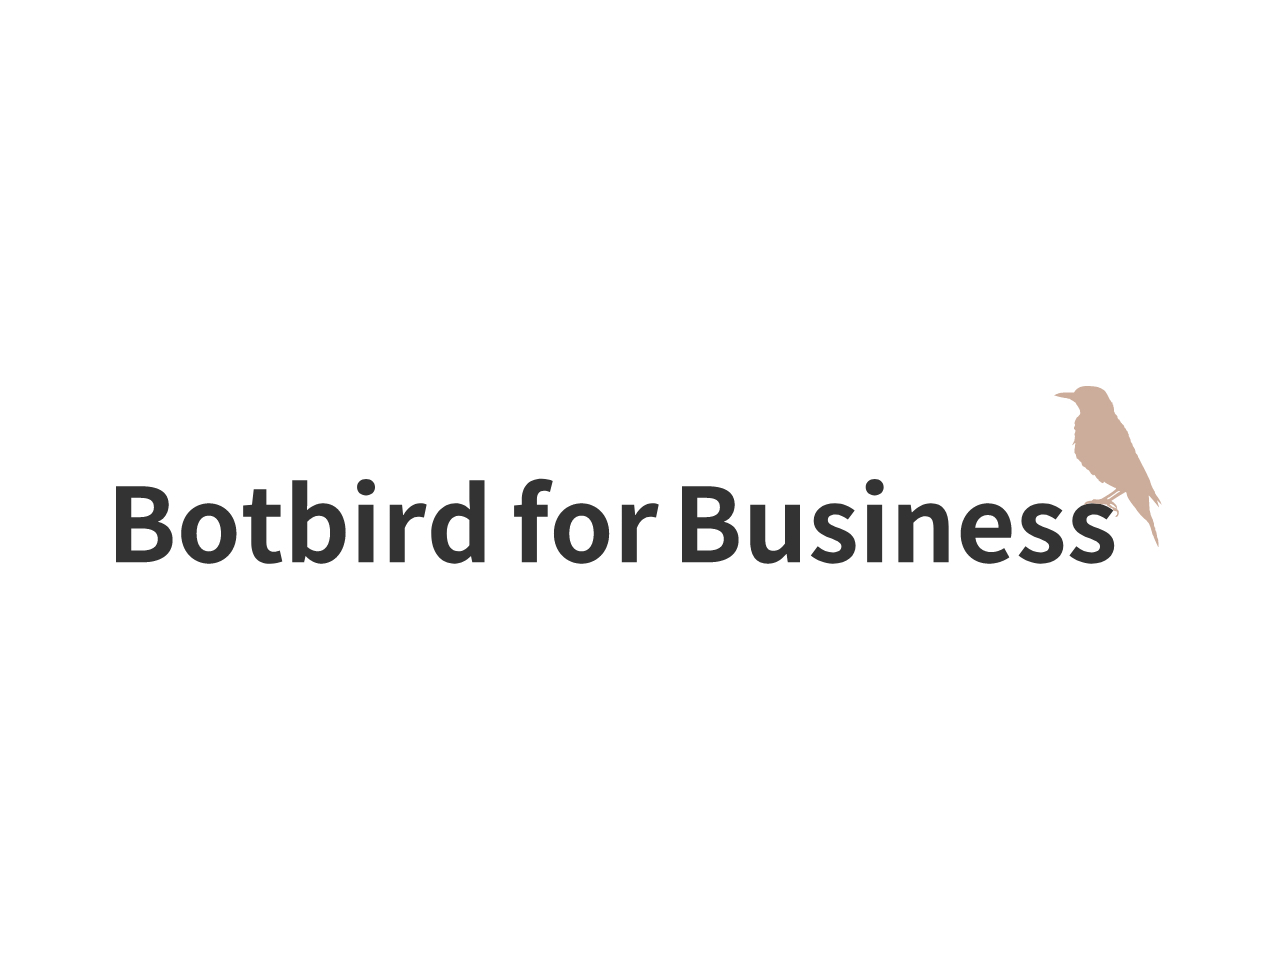 「Botbird」「Botbird for Business」はAIチャットボット作成サービス。様々なプラットフォームに対応したチャットボットを簡単に作成できる。